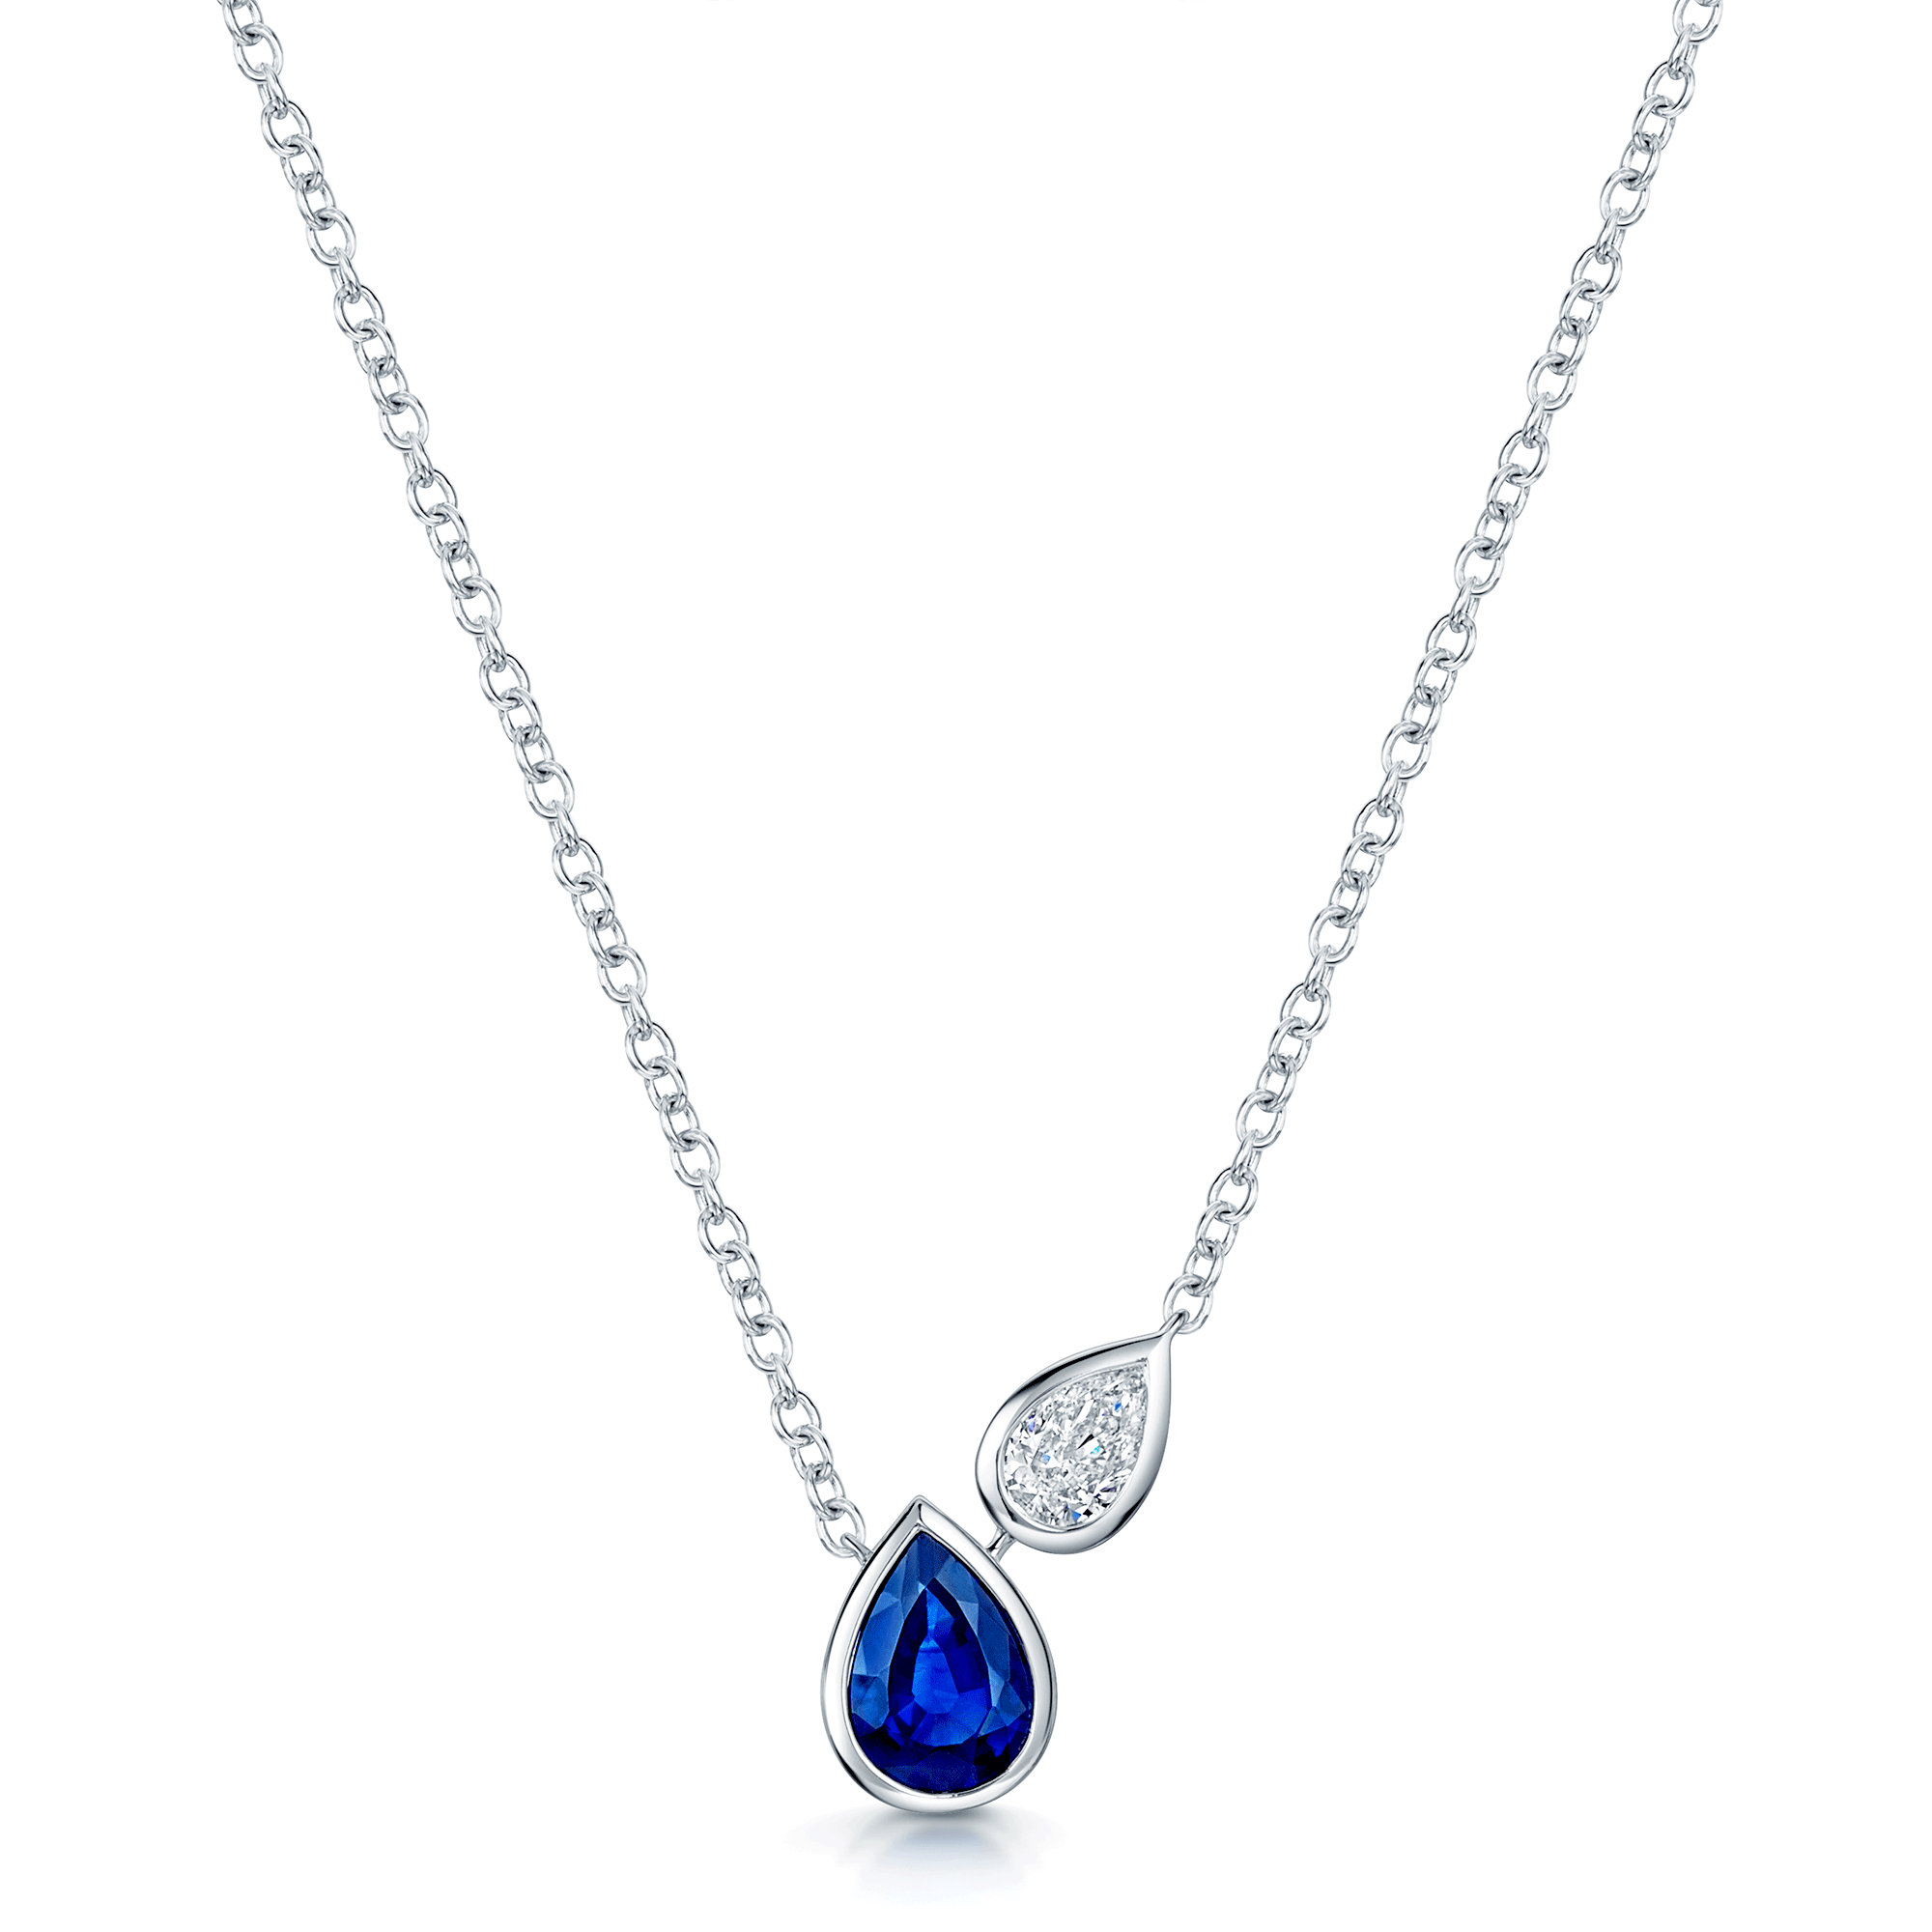 Buy Blue Sapphire Necklace American Diamond Necklace Sapphire Statement  Necklace Blue Bridal Necklace Sapphire Diamond Necklace CZ Sets Online in  India - Etsy